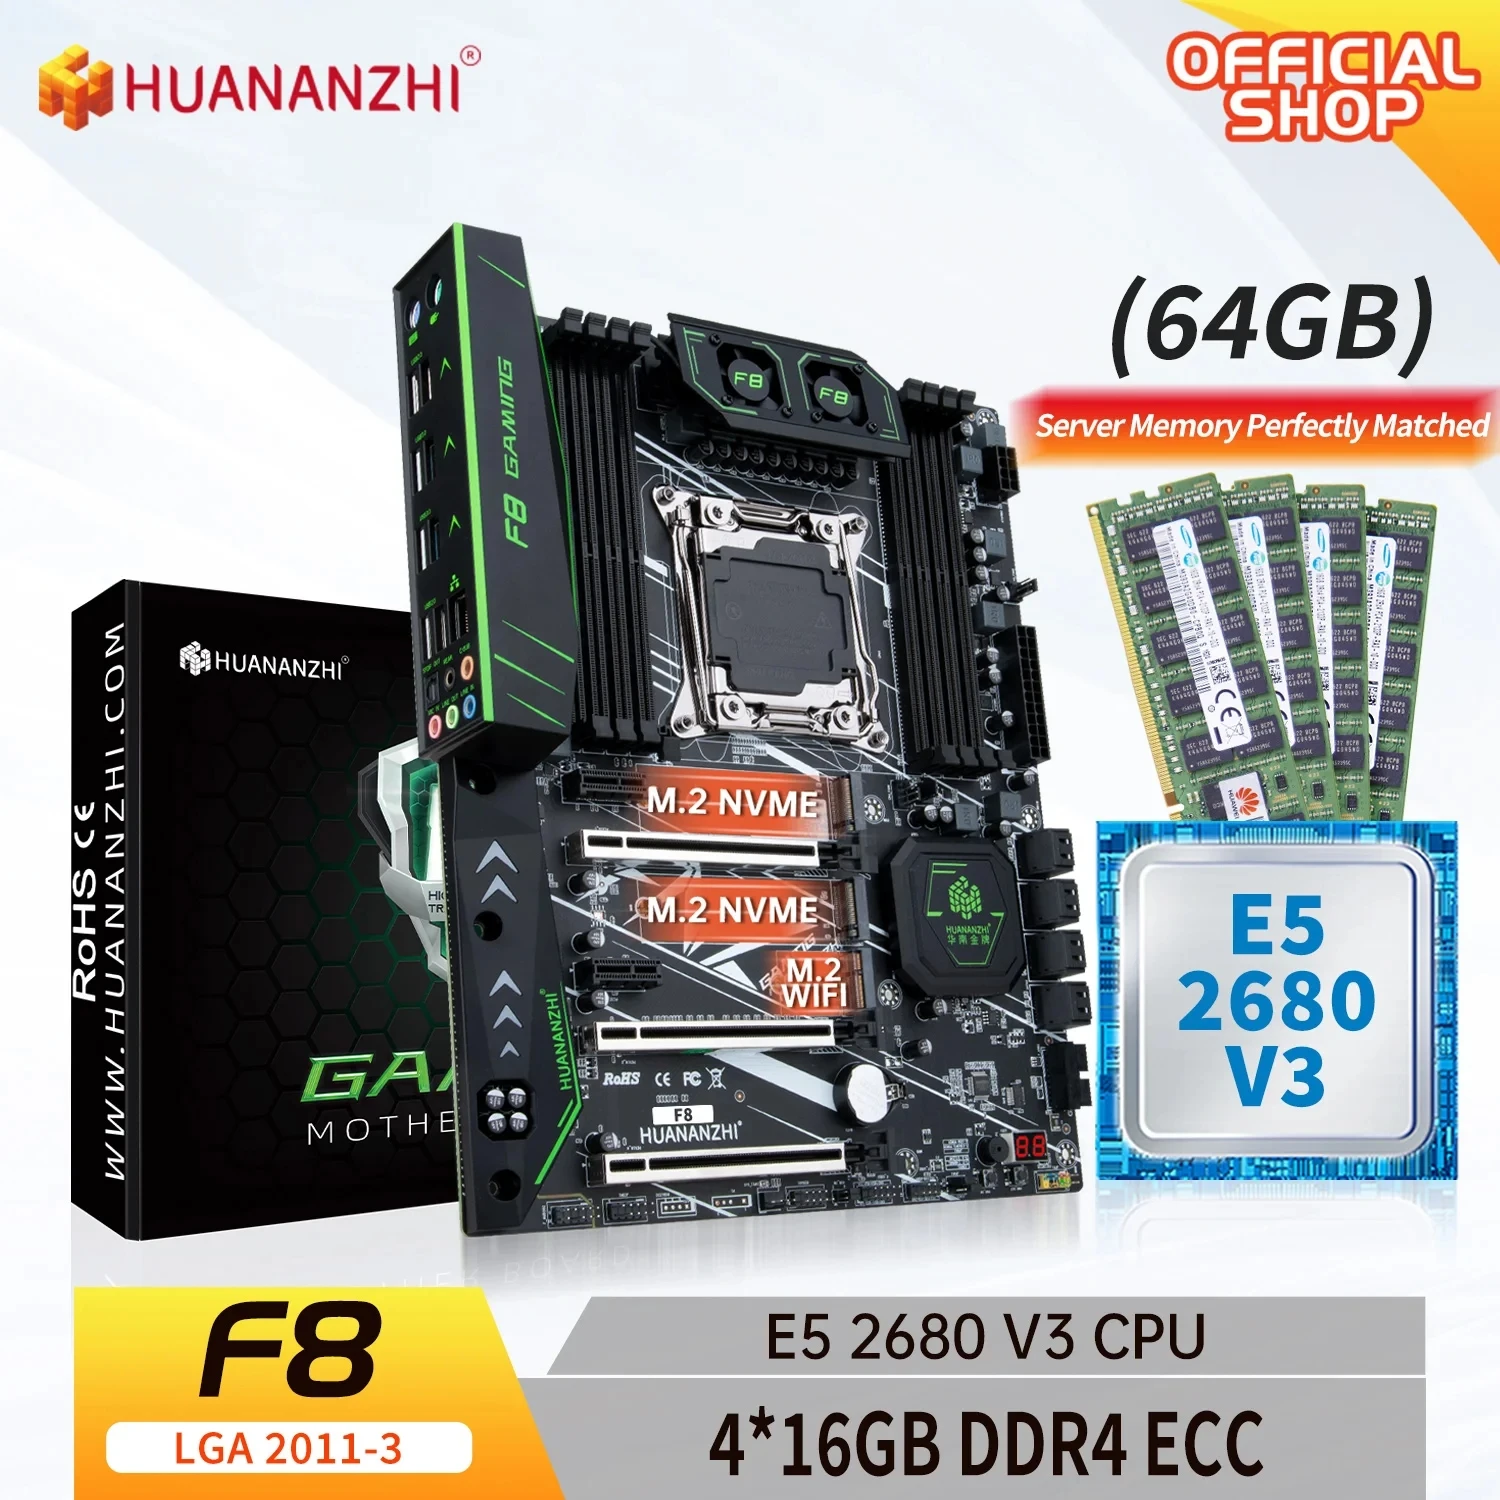 

HUANANZHI X99 F8 LGA 2011-3 XEON X99 Motherboard with Intel E5 2680 V3 with 4*16G DDR4 RECC memory combo kit set NVME SATA